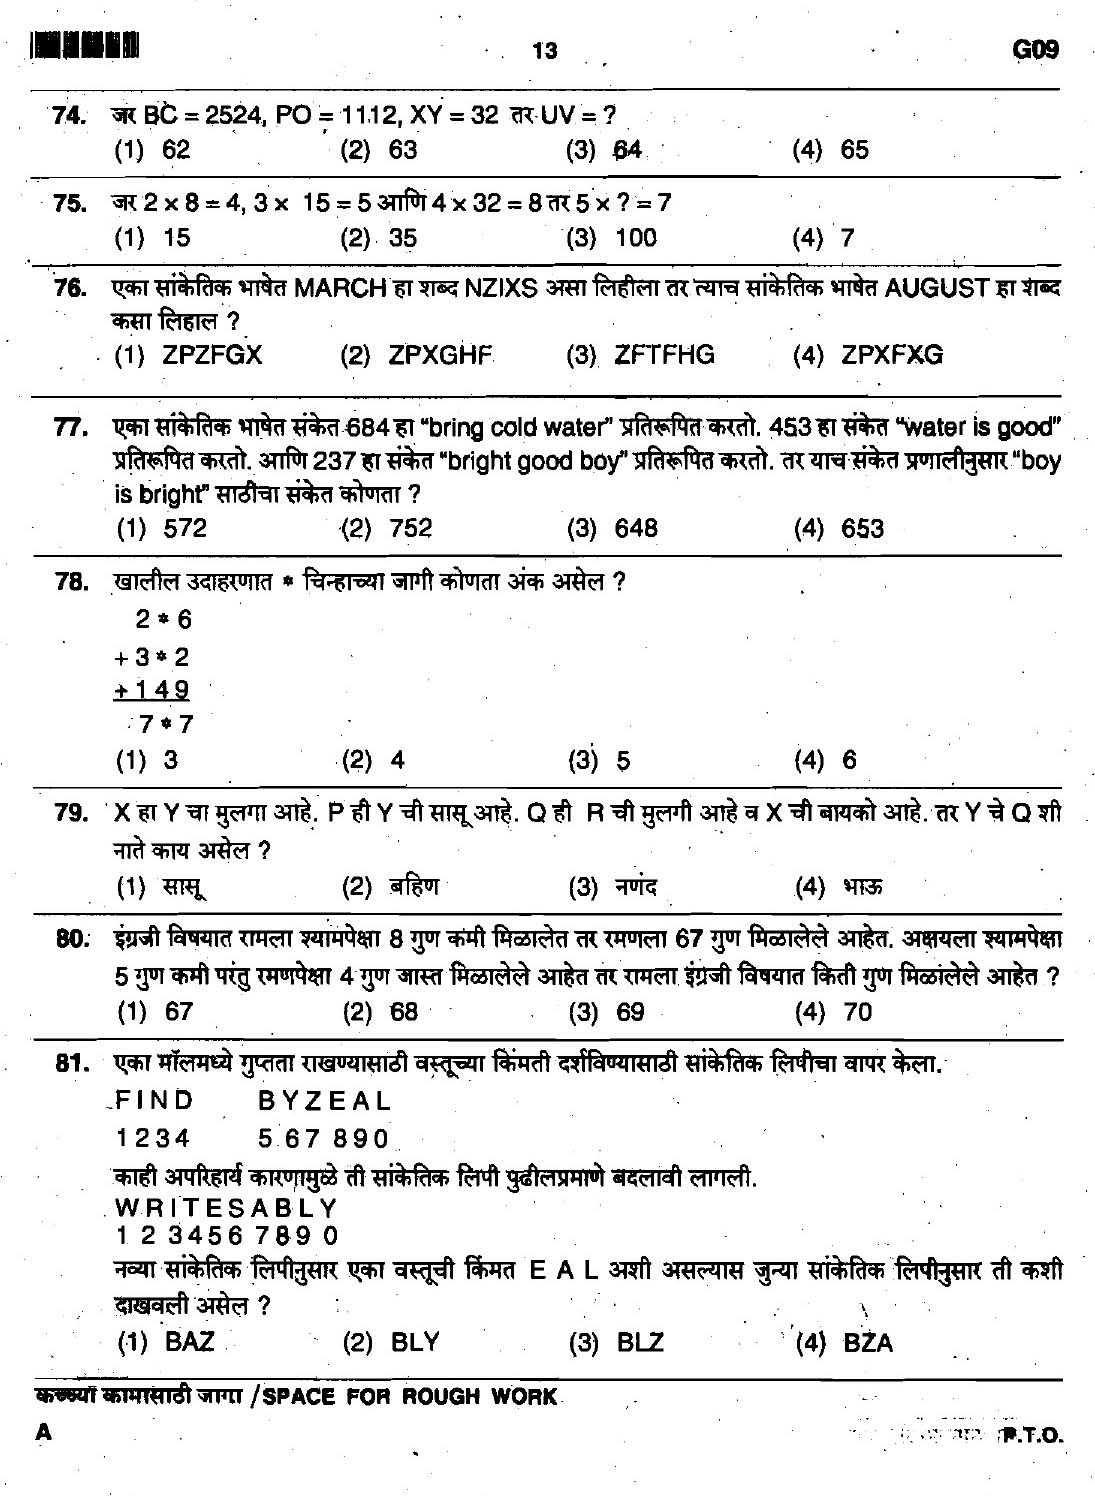 Maharashtra PSC Clerk Typist Preliminary Exam Question Paper 2017 12